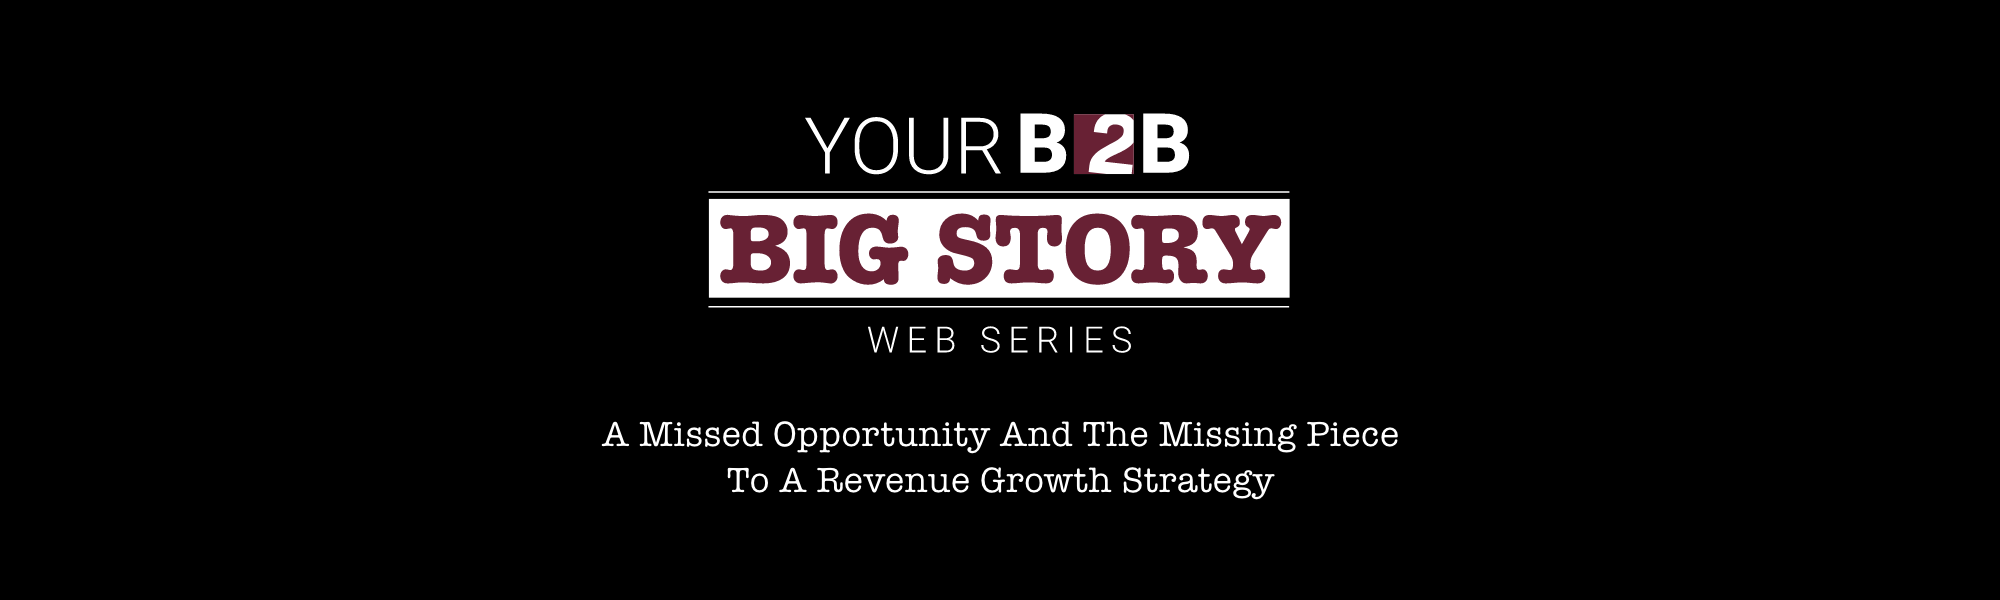 Your B2B Big Story Web Series